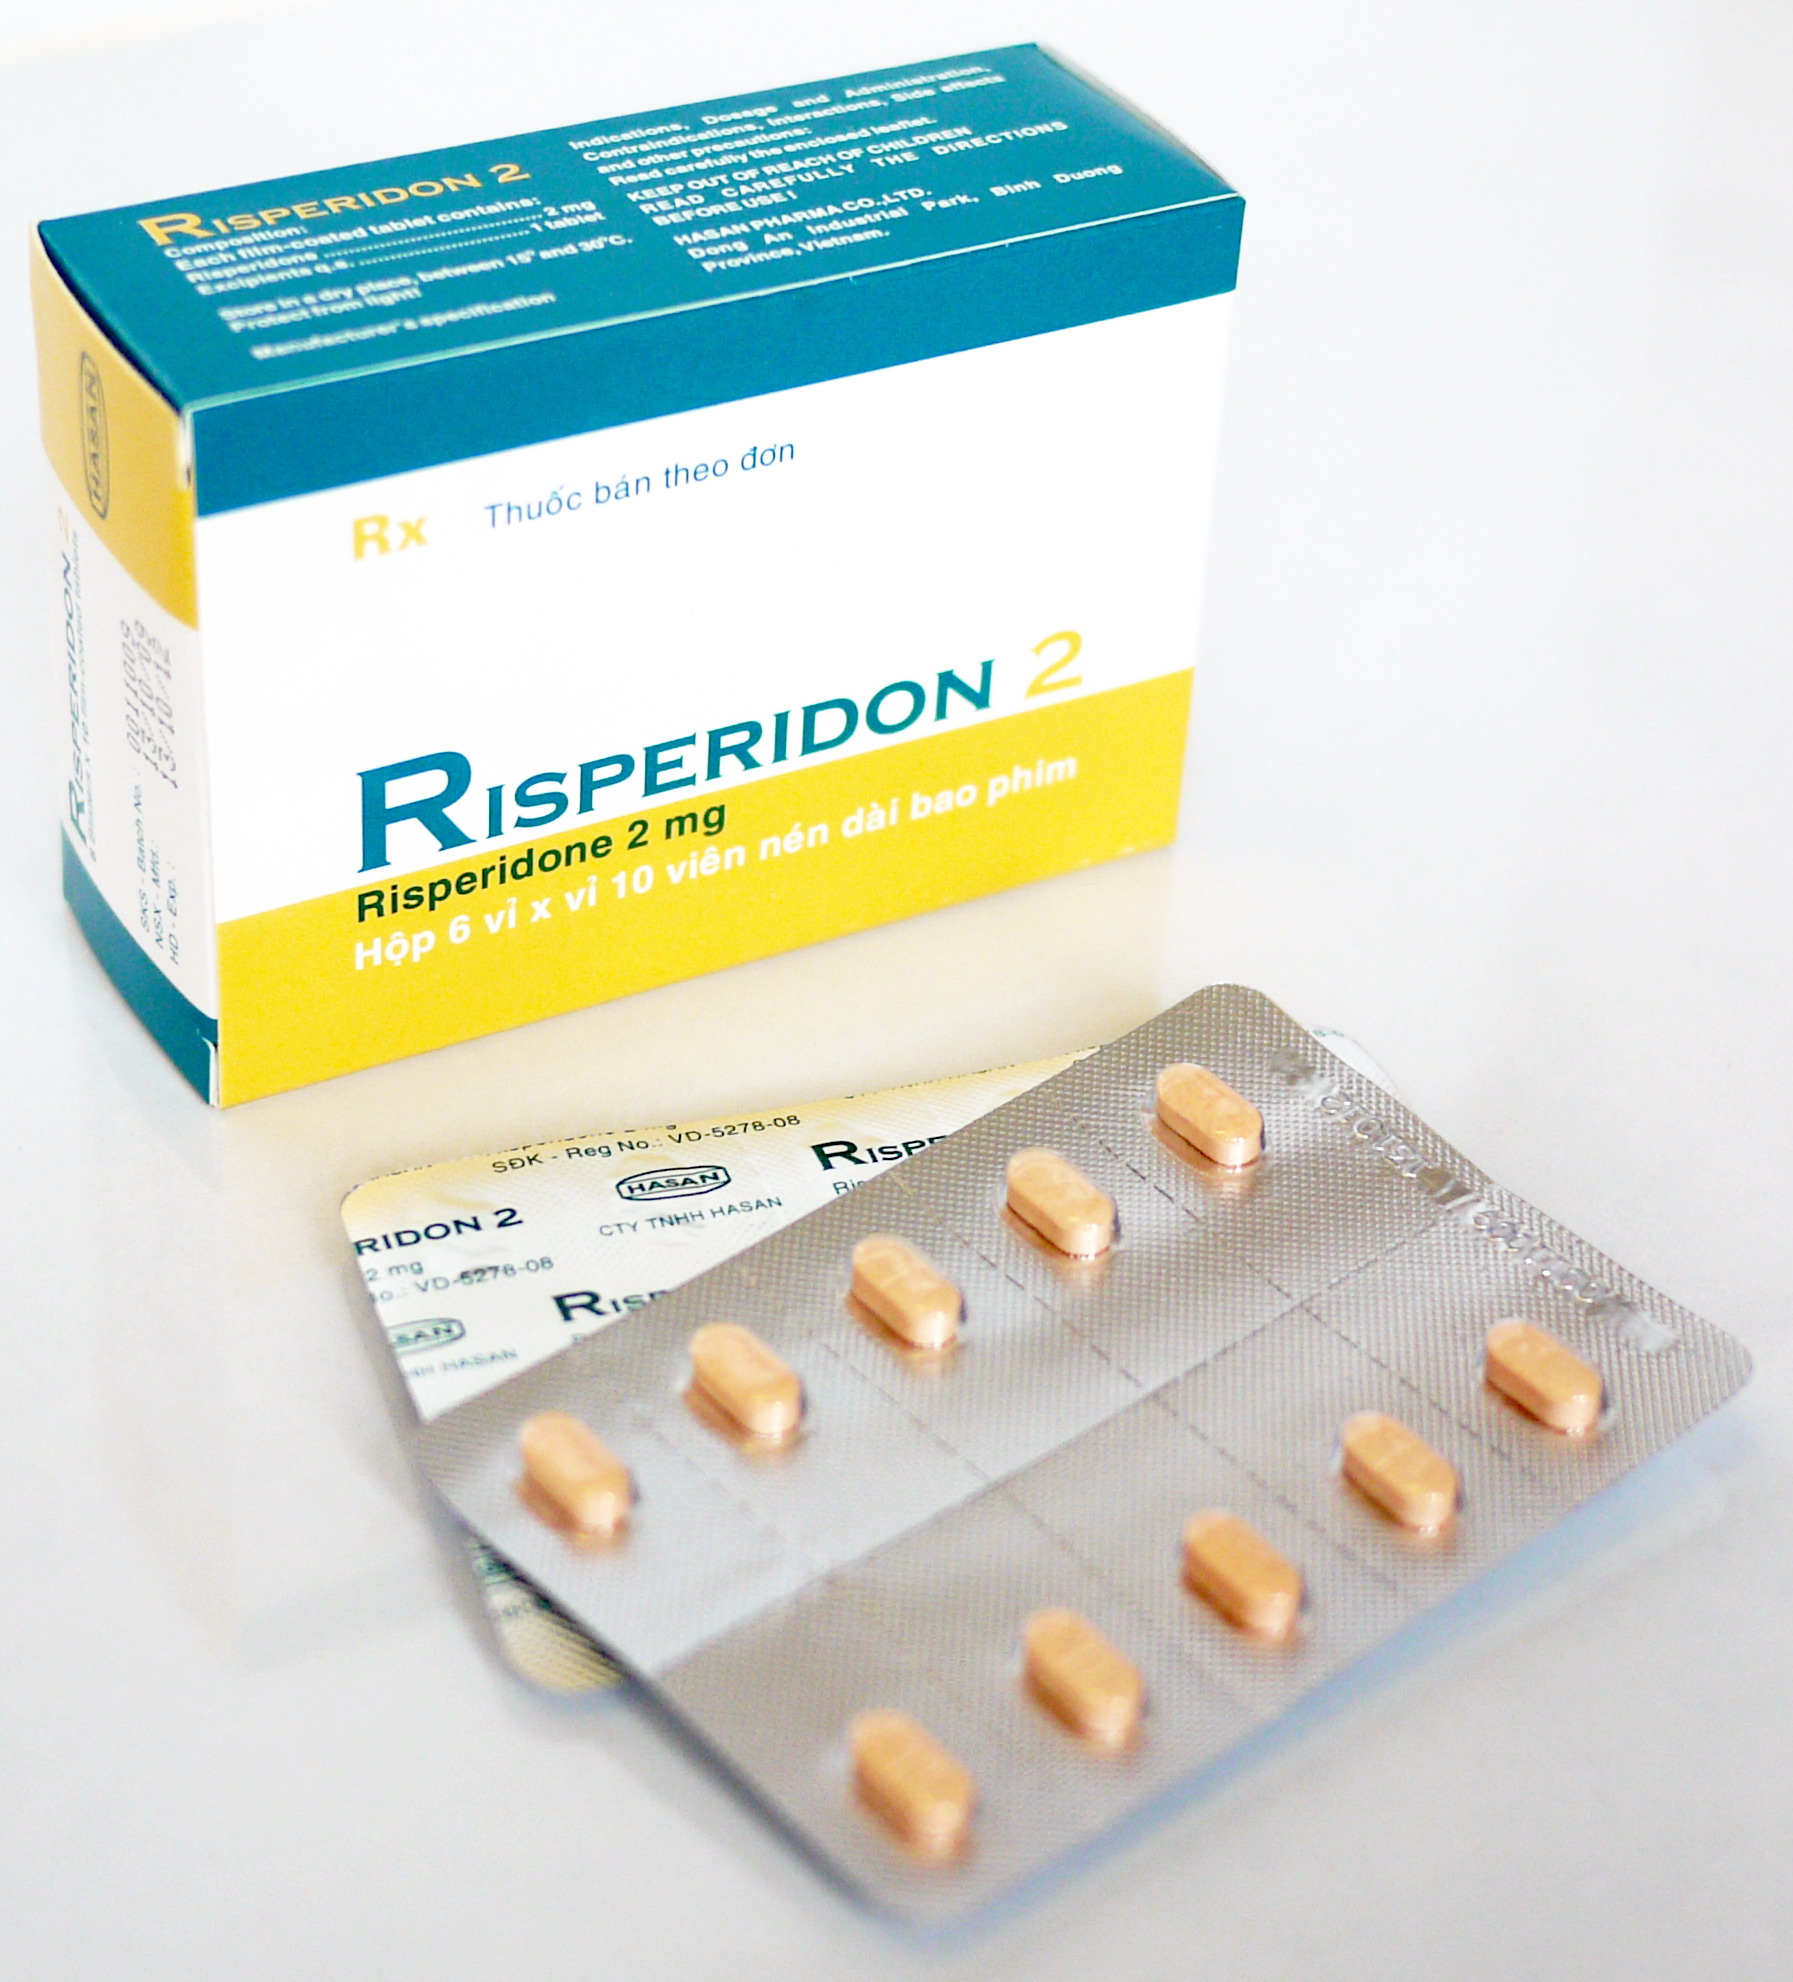 Risperdal Drug Lawsuit Were You Injured by Risperidone? Consumer